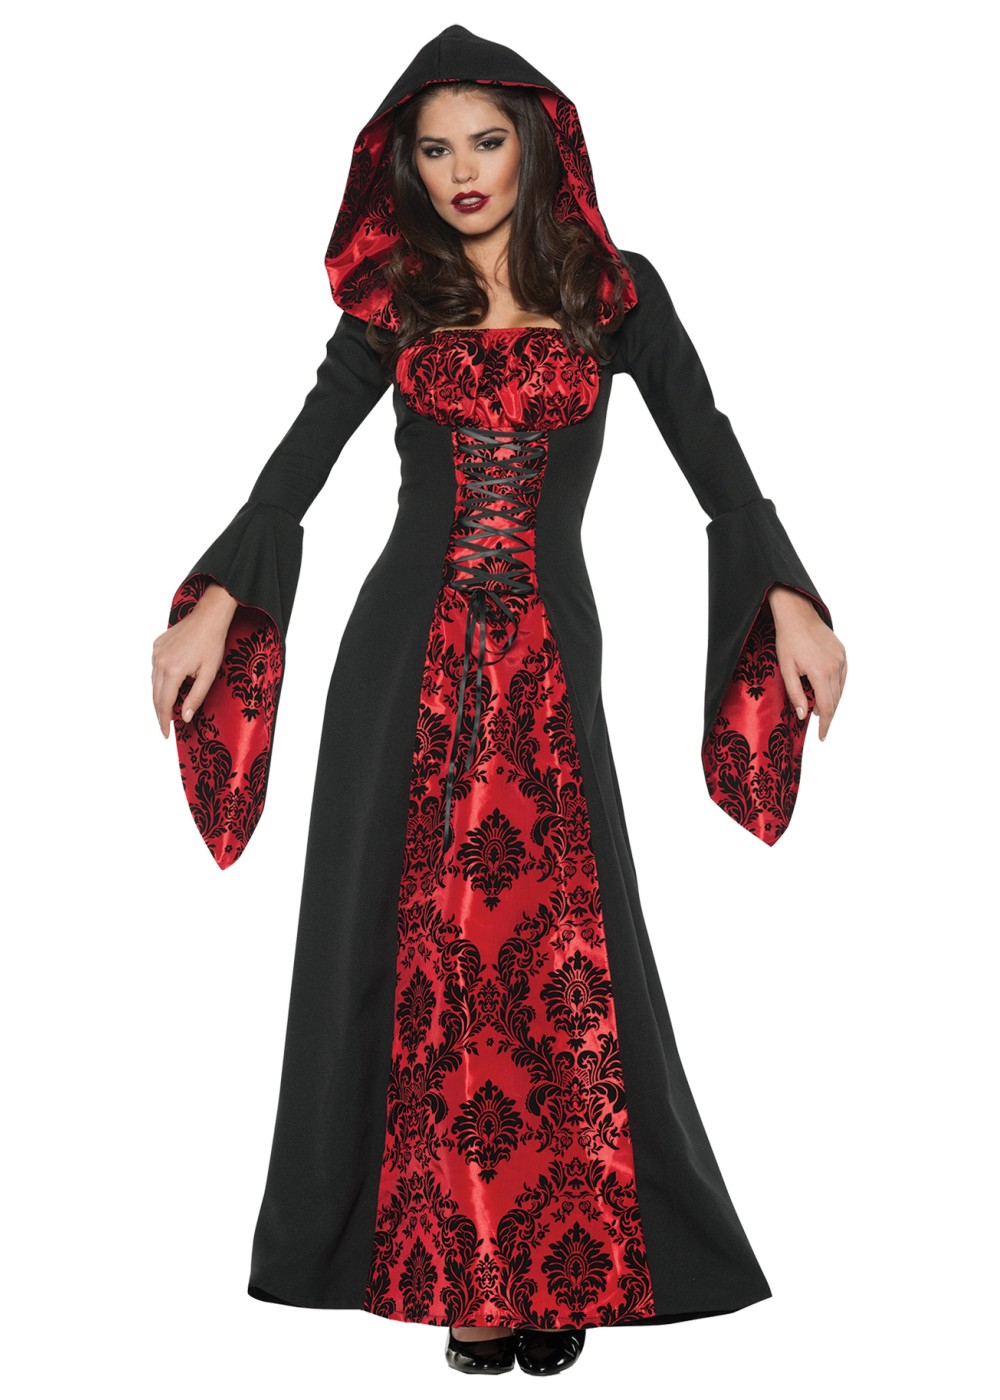 Scarlette Mistress Witch Woman Costume